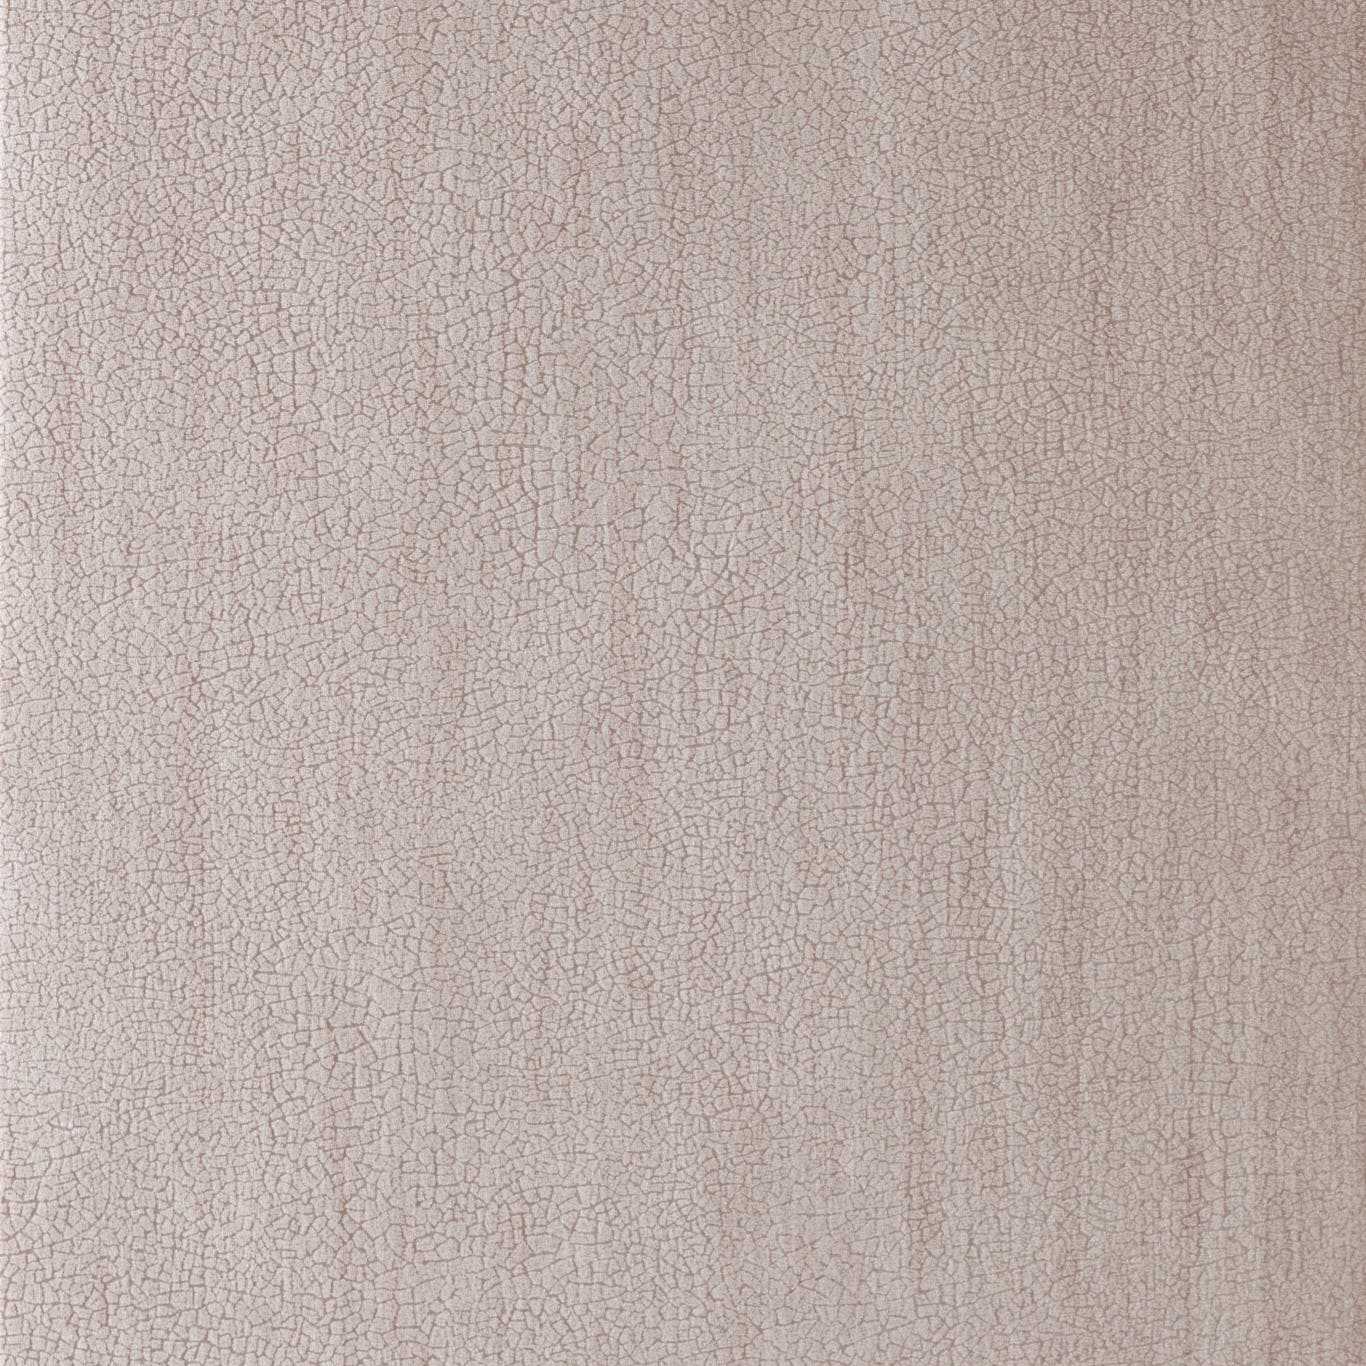 Igneous Shell Wallpaper EANT111139 by Harlequin